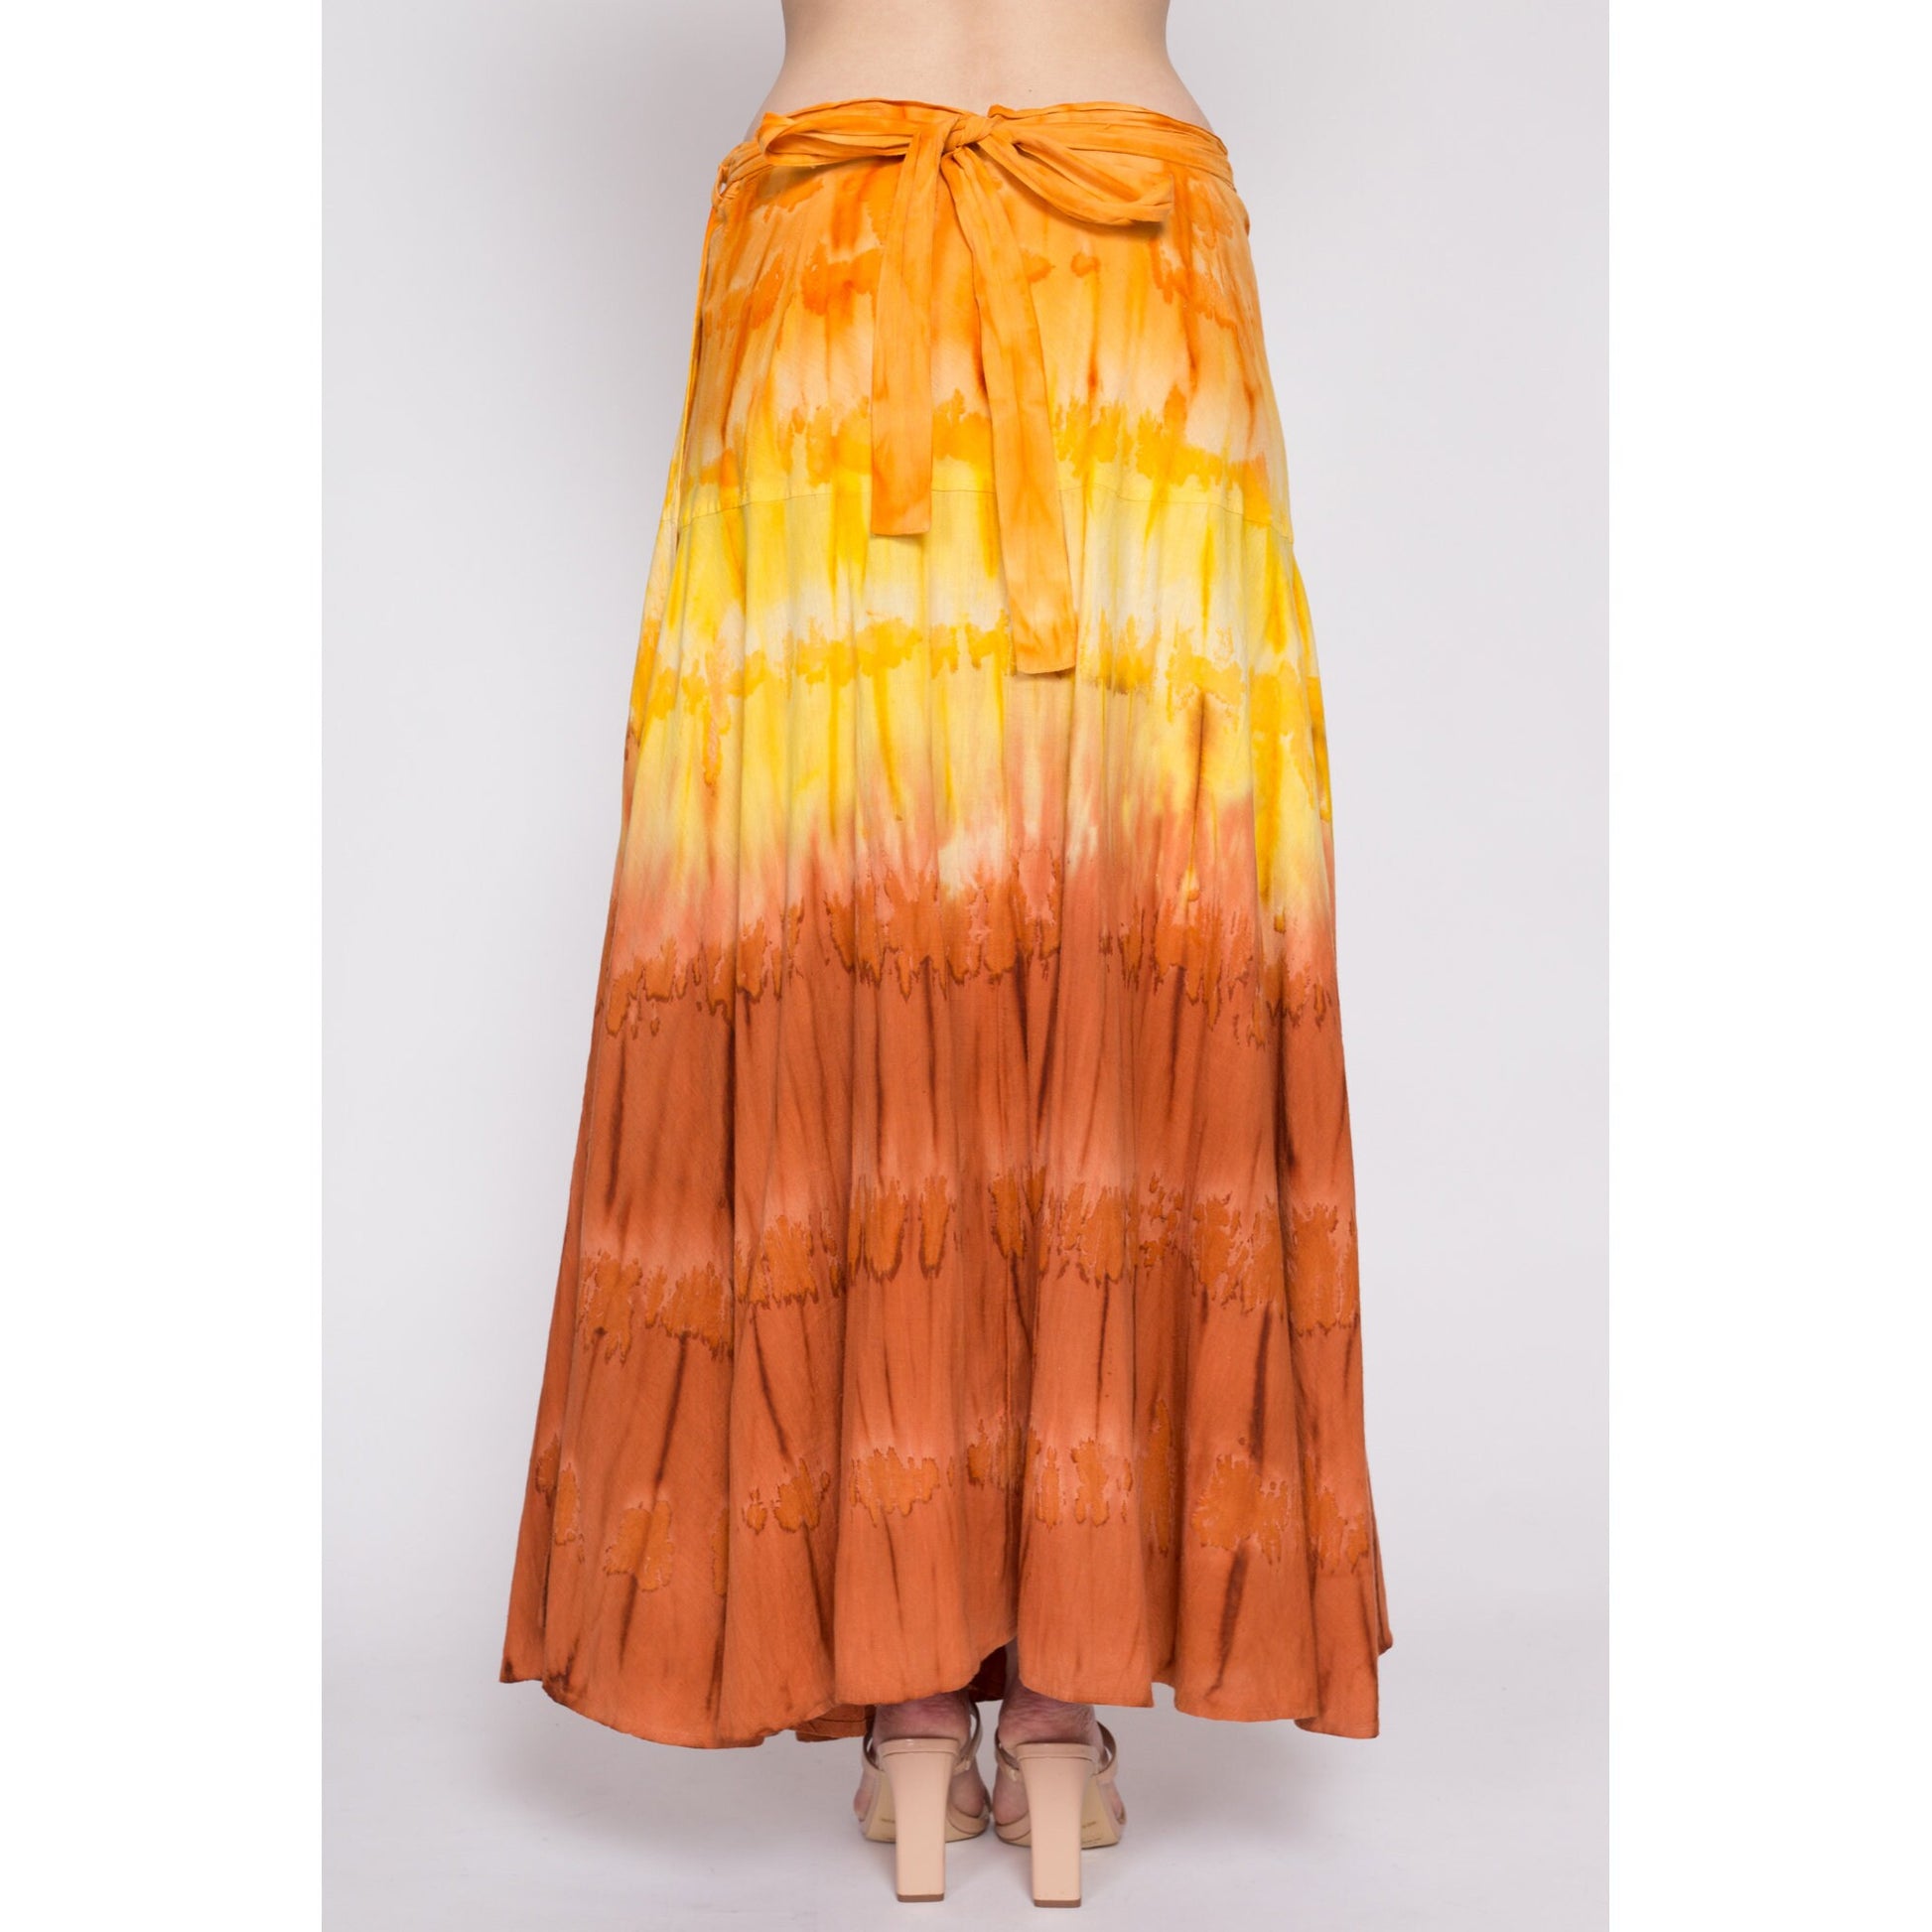 Vintage Boho Tie Dye Maxi Wrap Skirt - Large to XL | 90s Indian Cotton Hippie A Line Long Skirt